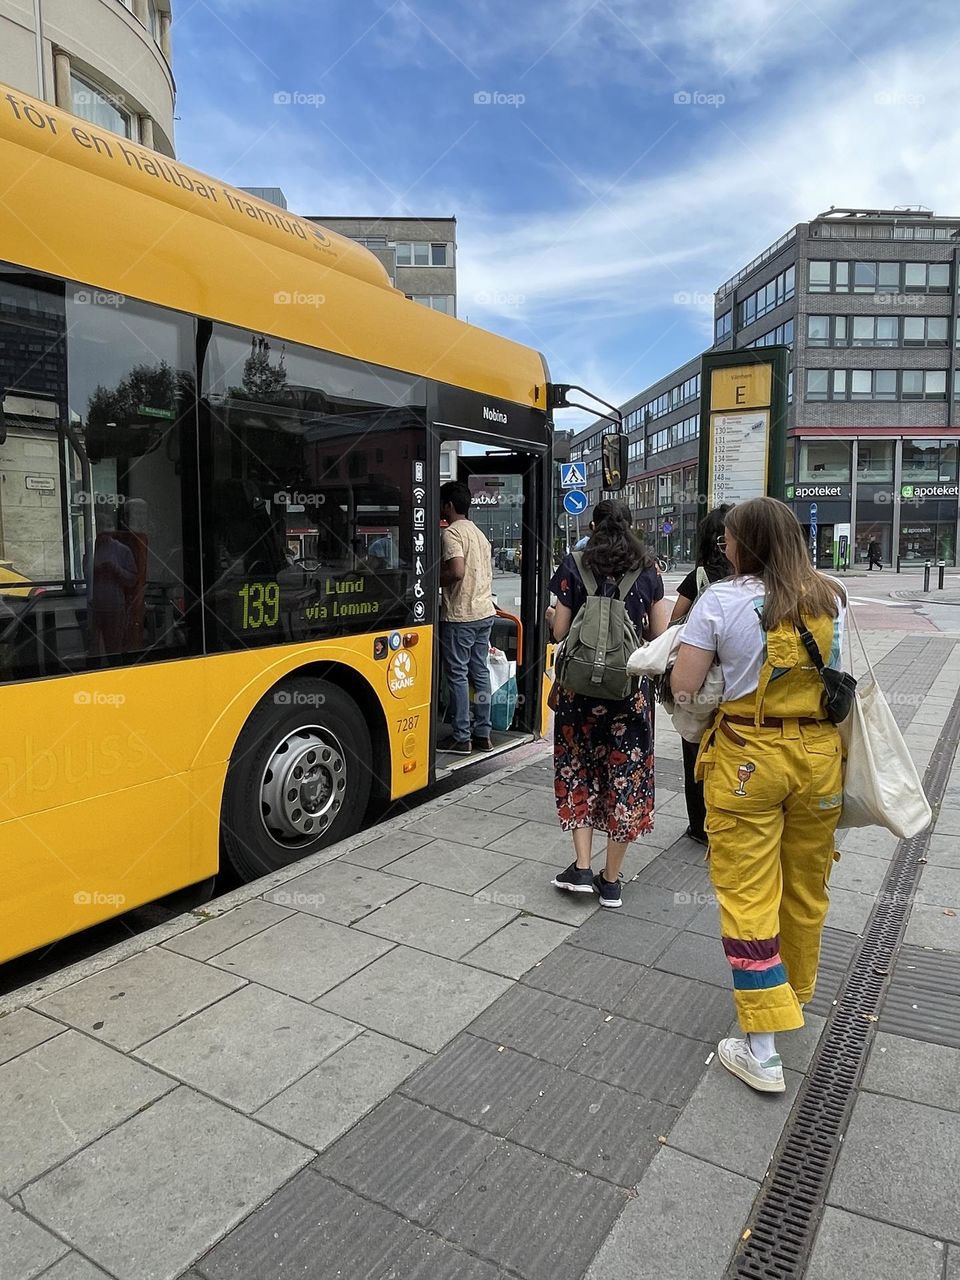 Public transport by bus